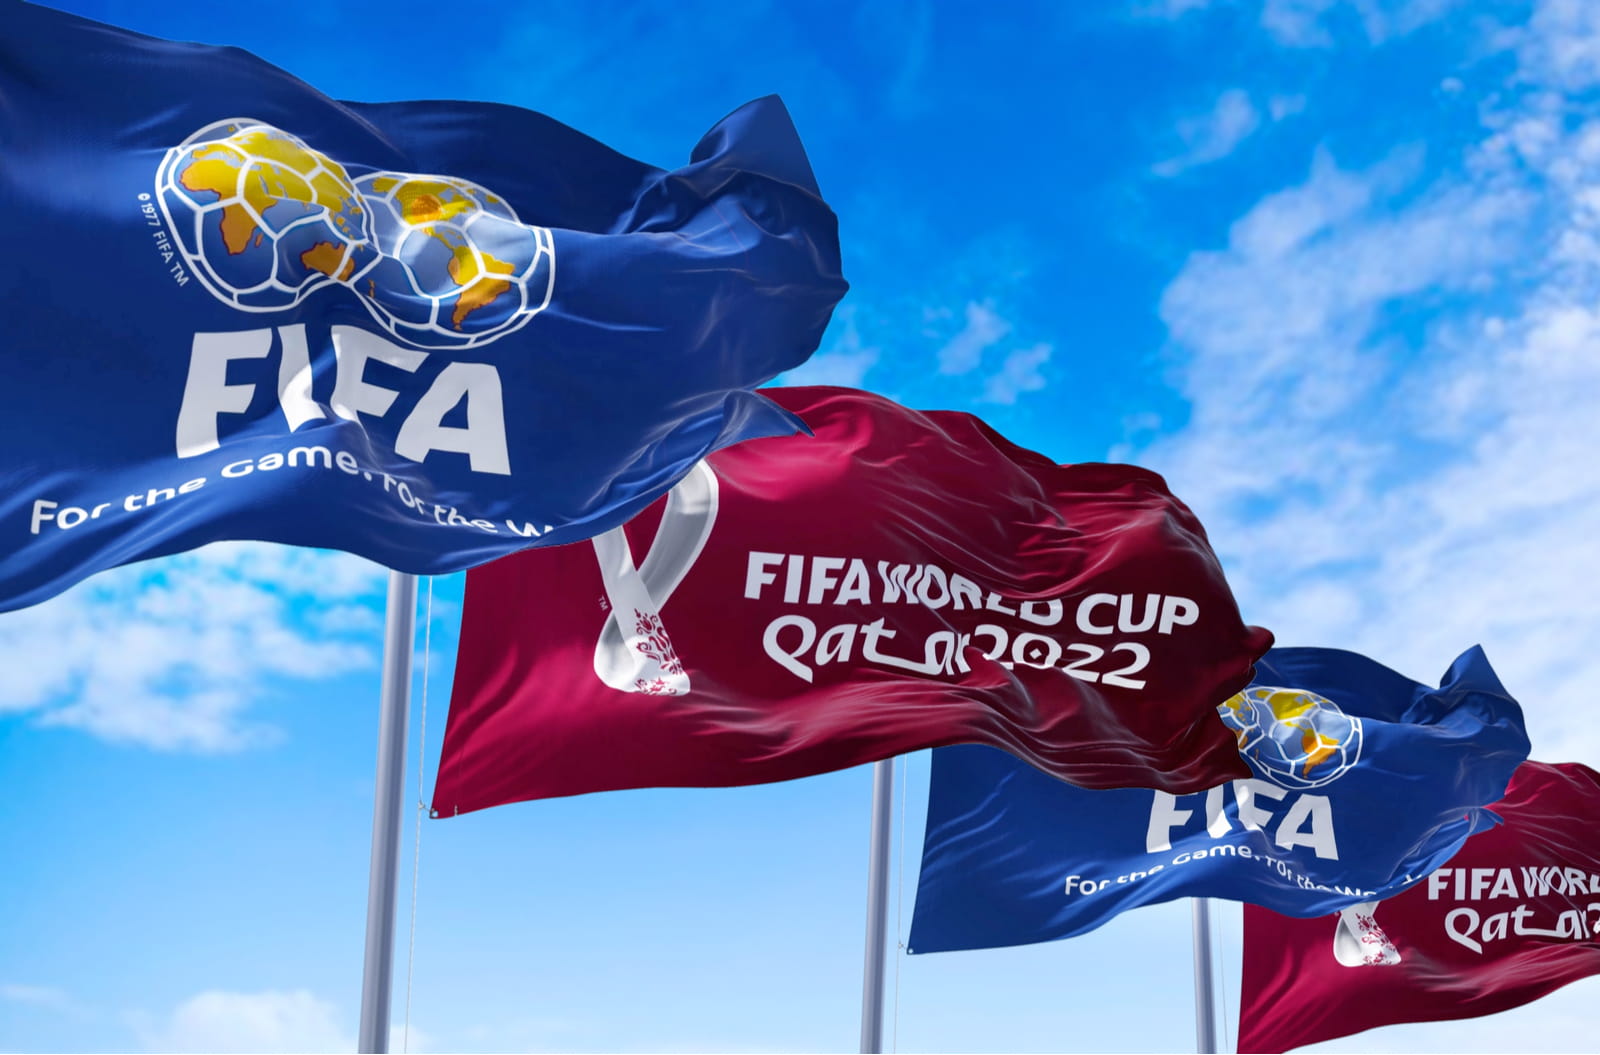 FIFA World Cup Qatar